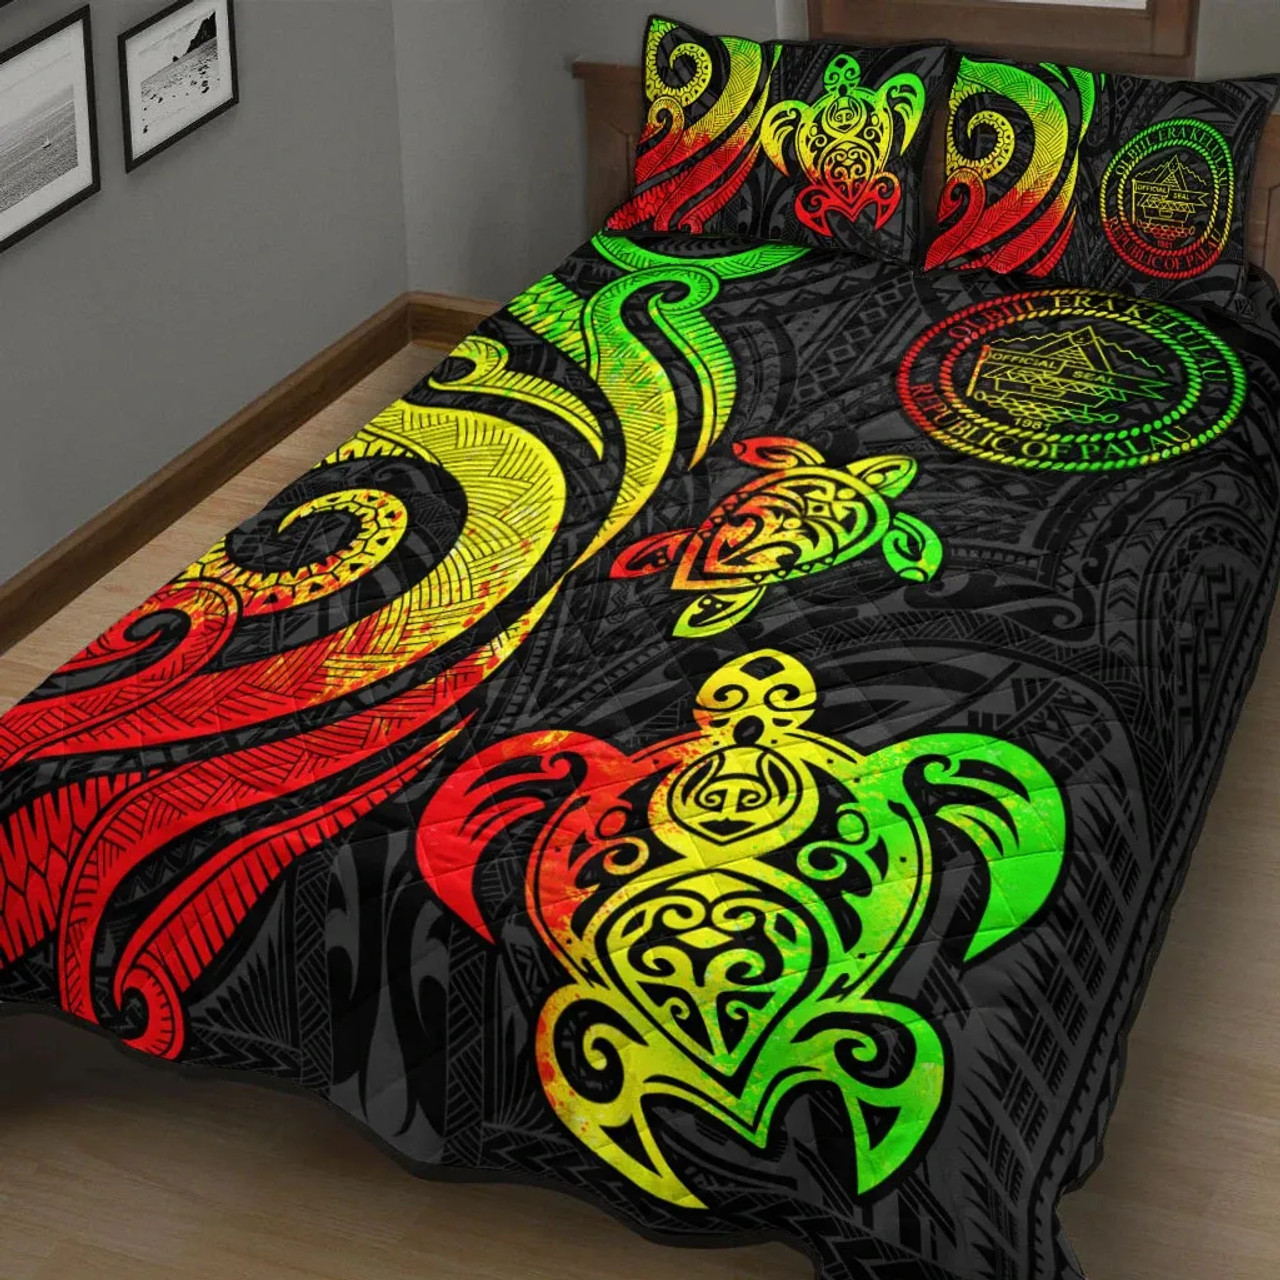 Palau Quilt Bed Set - Reggae Tentacle Turtle 2